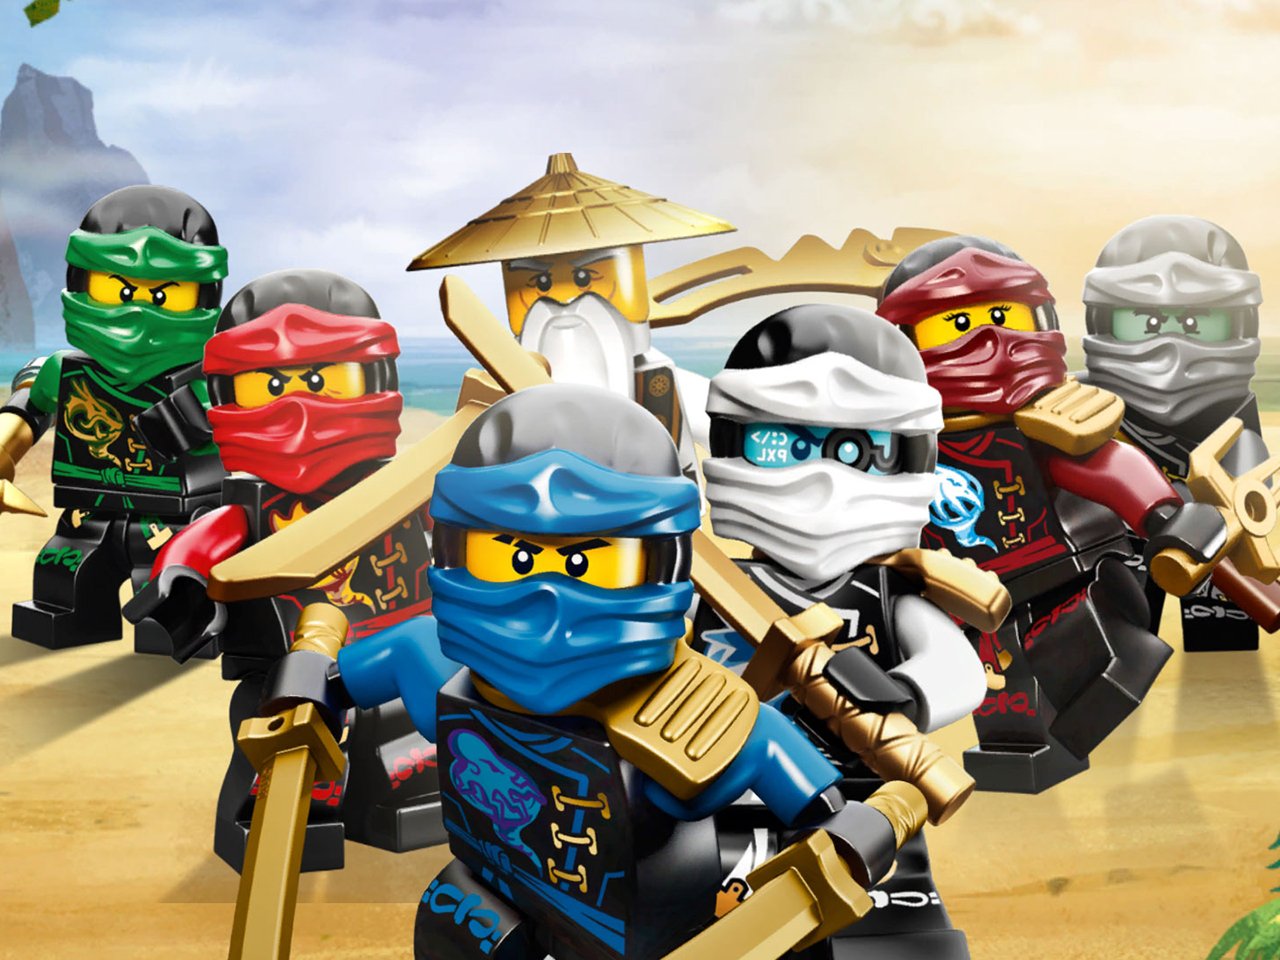 Lego Ninjago characters